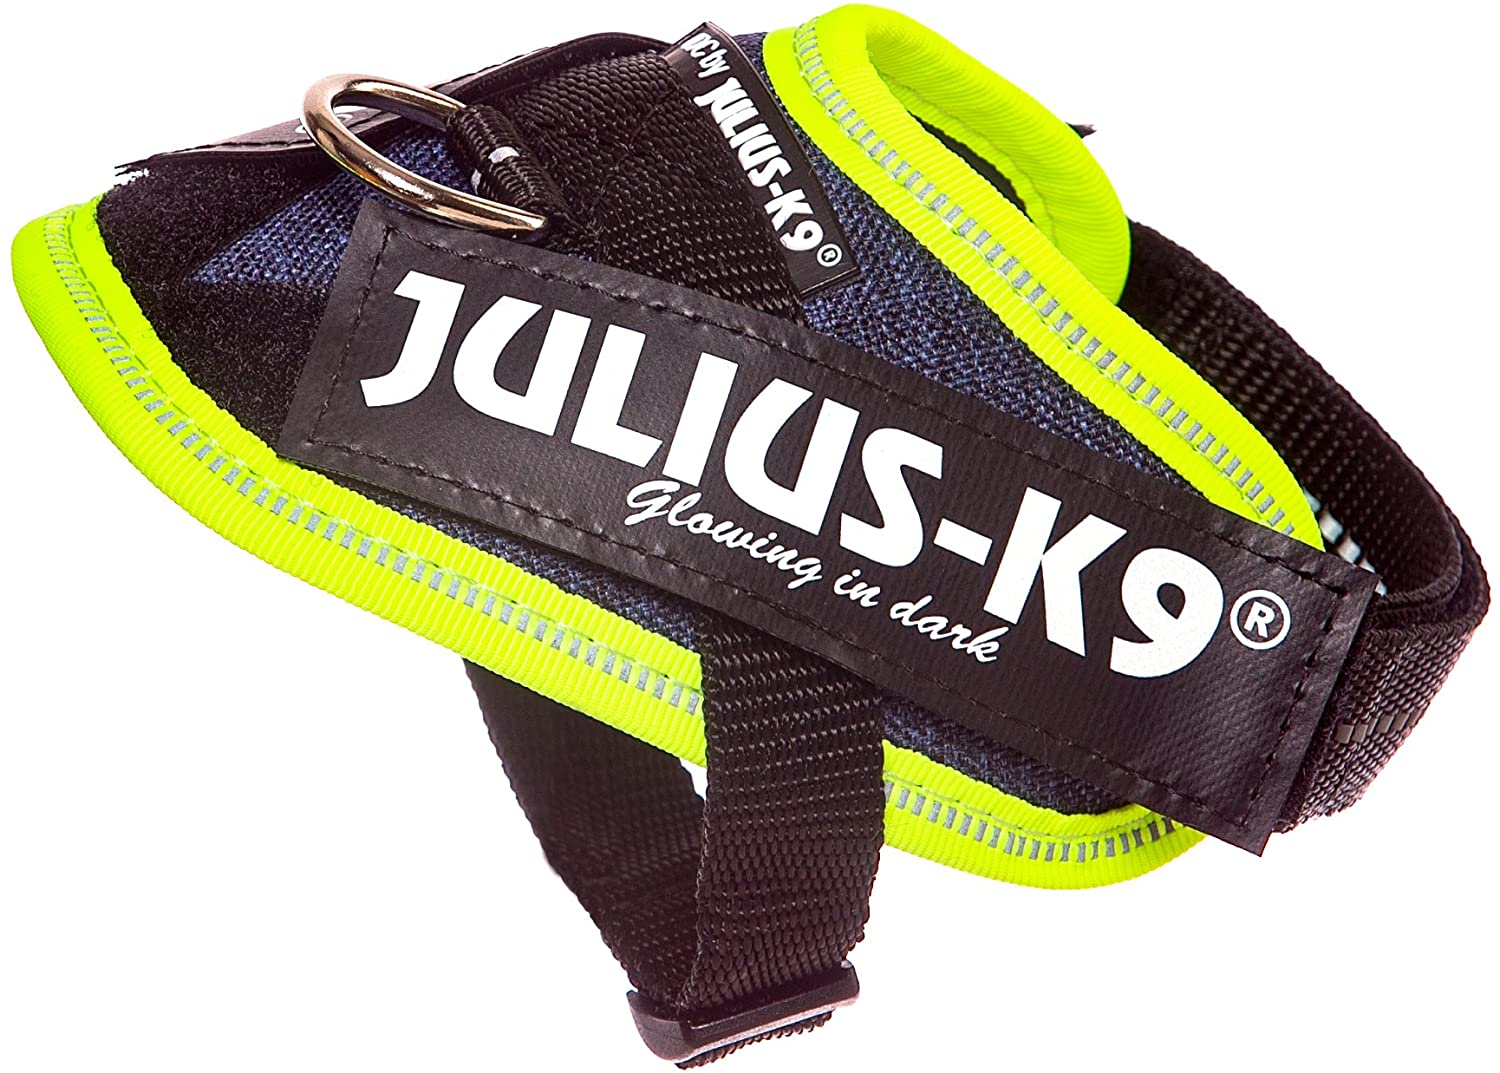  Julius-K9 16IDC - Power Harness 